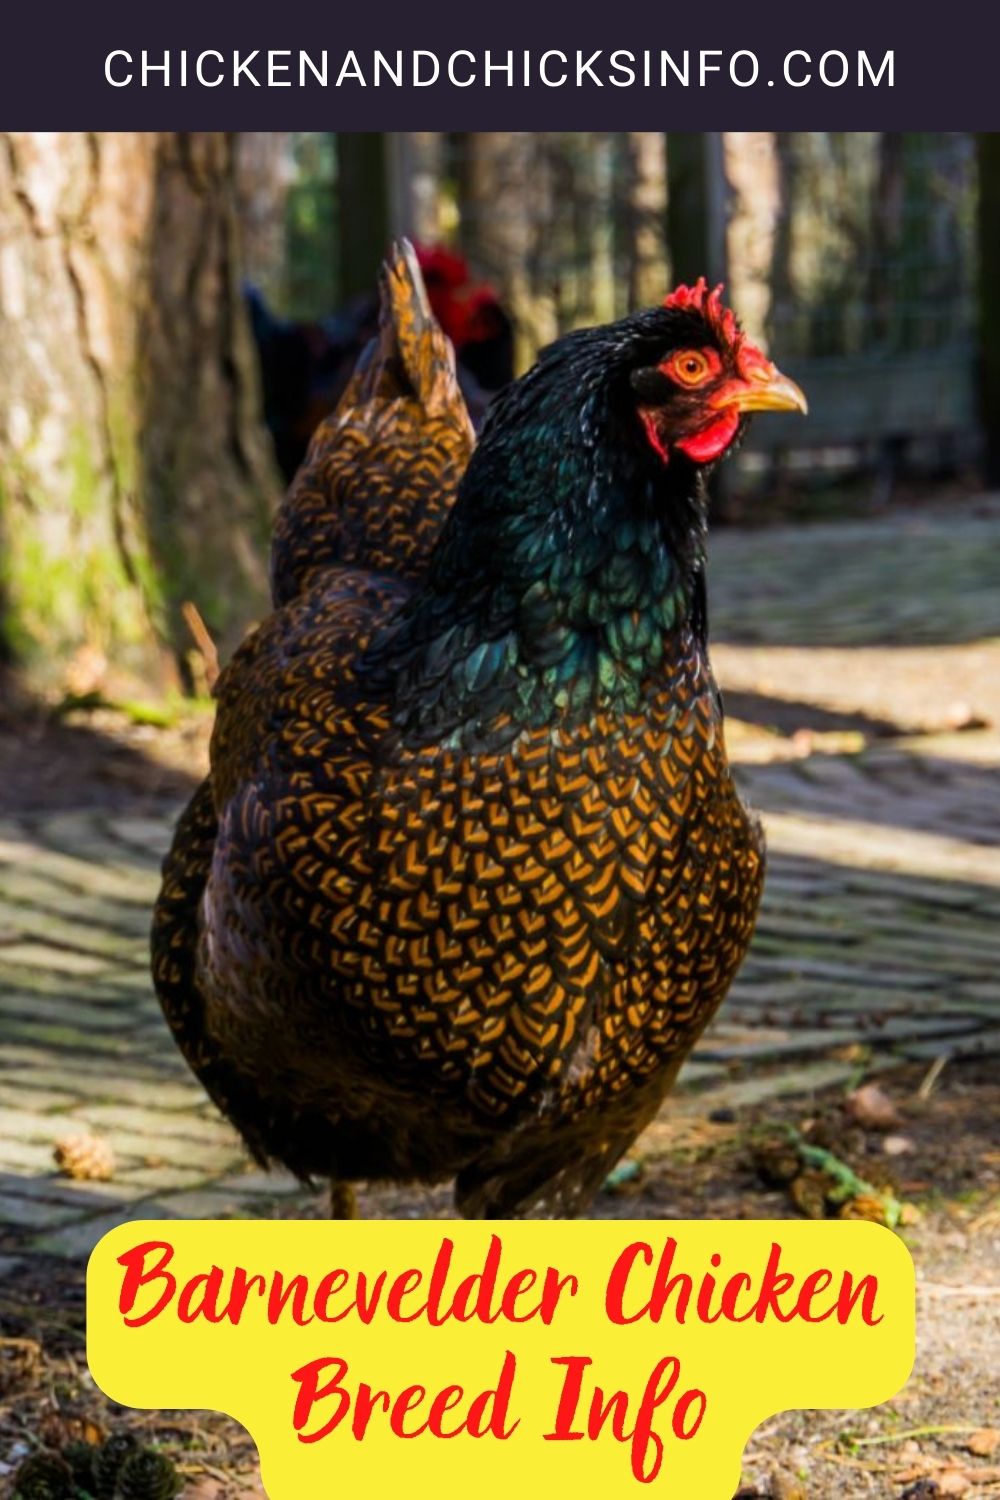 Barnevelder Chicken Breed Info pinterest image.